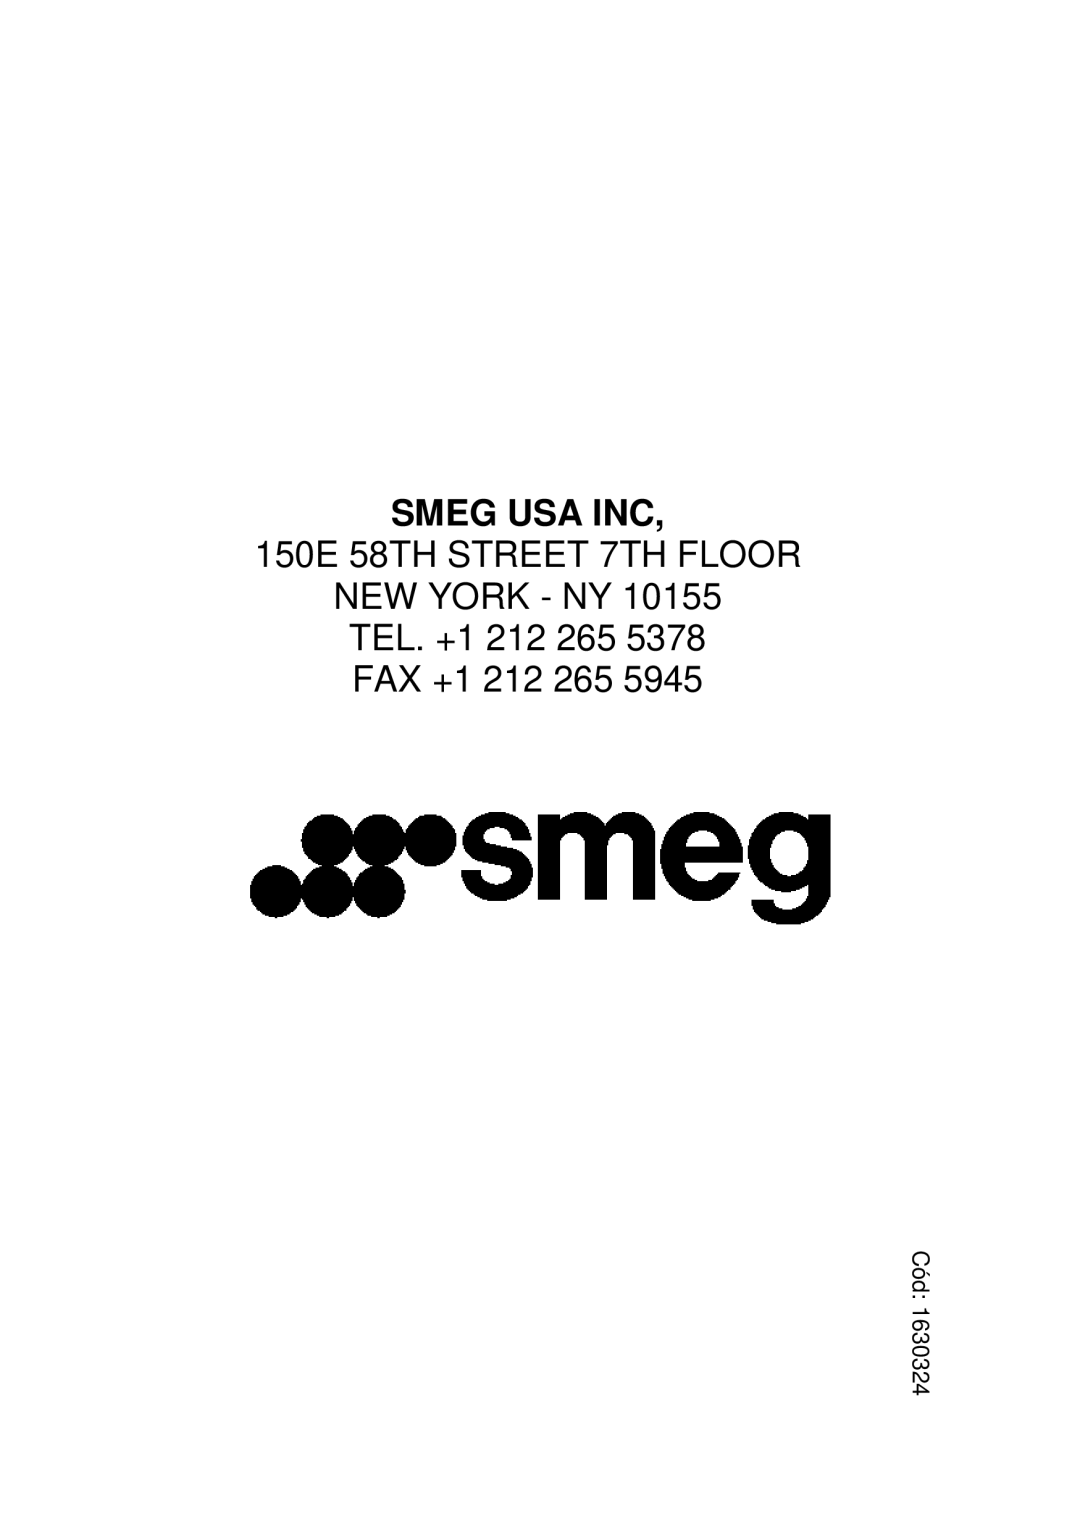 Smeg SU45 MCX manual 150E 58TH STREET 7TH FLOOR NEW YORK - NY TEL. +1 212 265, FAX +1 212 265, Smeg Usa Inc 